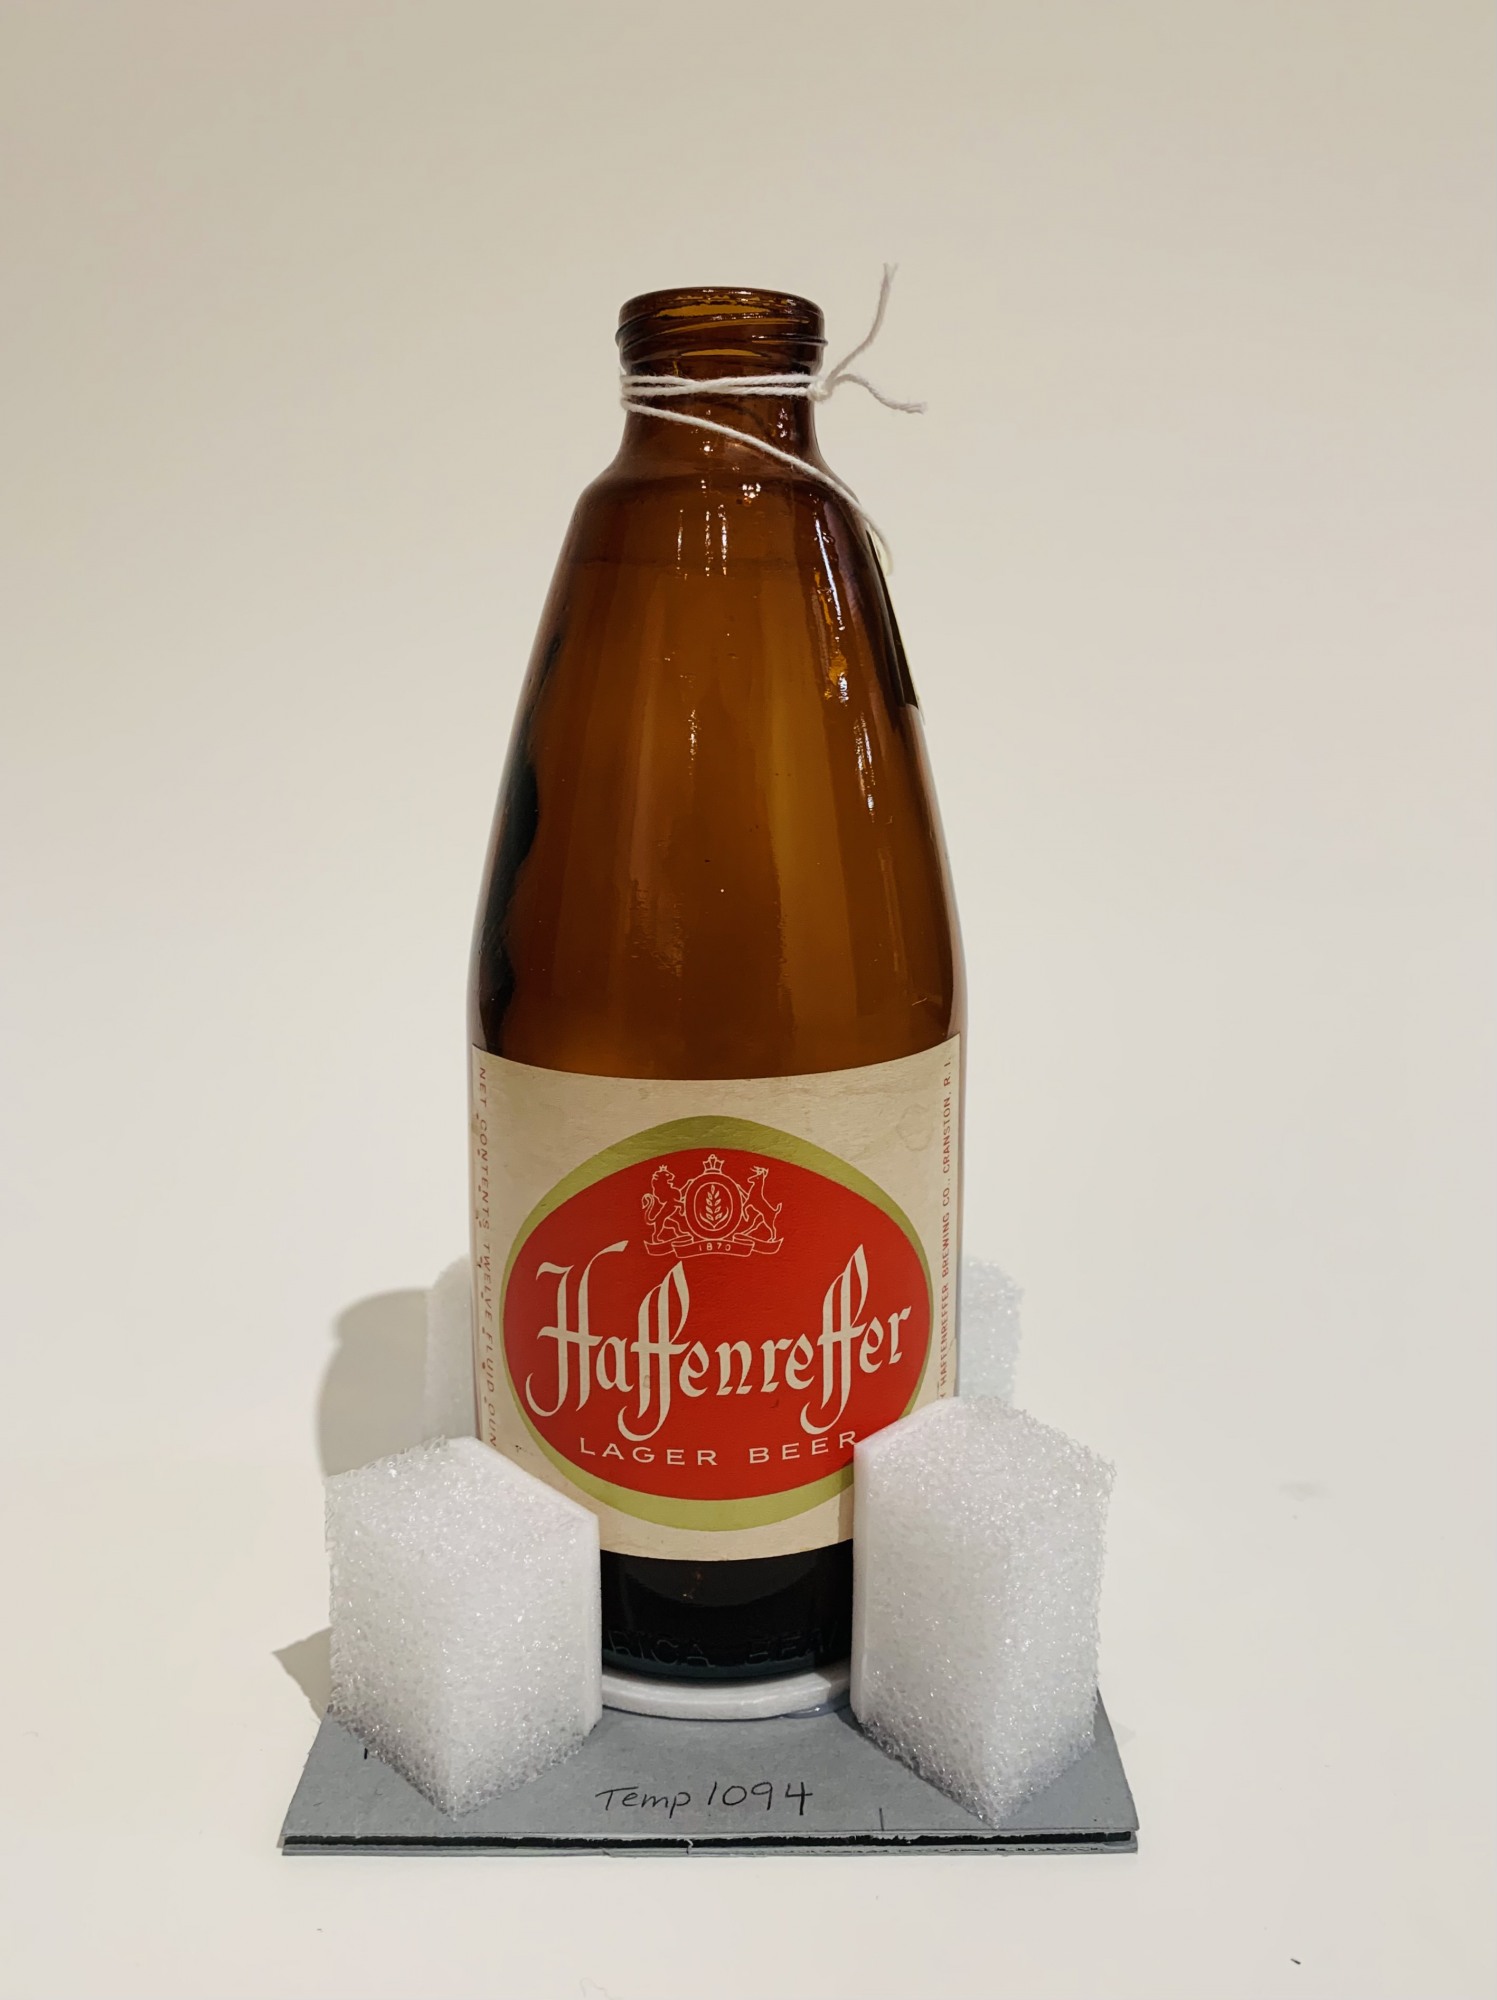 Photo of antique beer bottle with Haffenreffer Lager Beer label.  